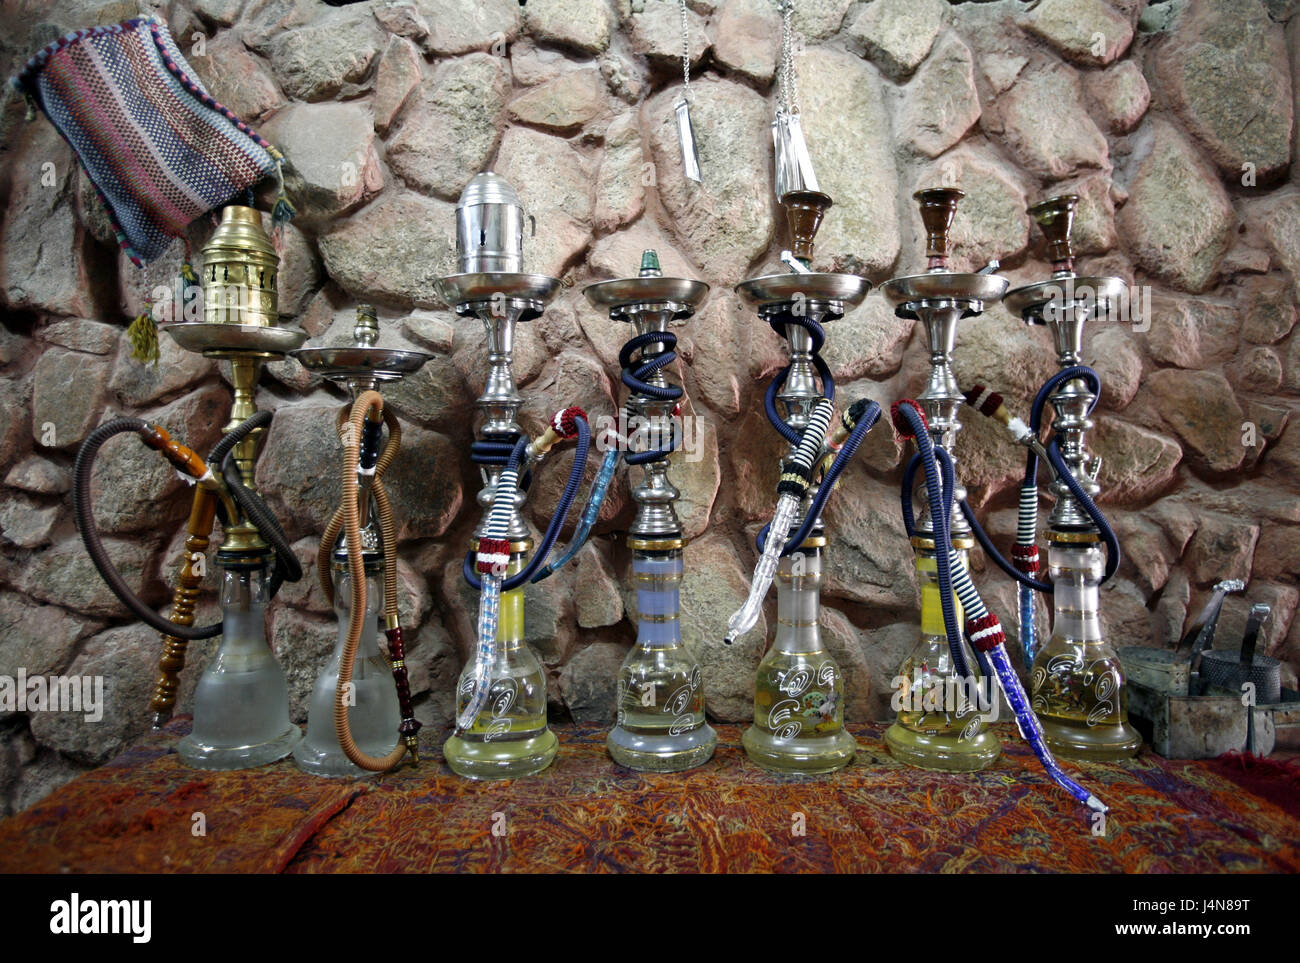 El Oriente Medio, Jordania, Petra, bar interior, silbatos, agua Foto de stock